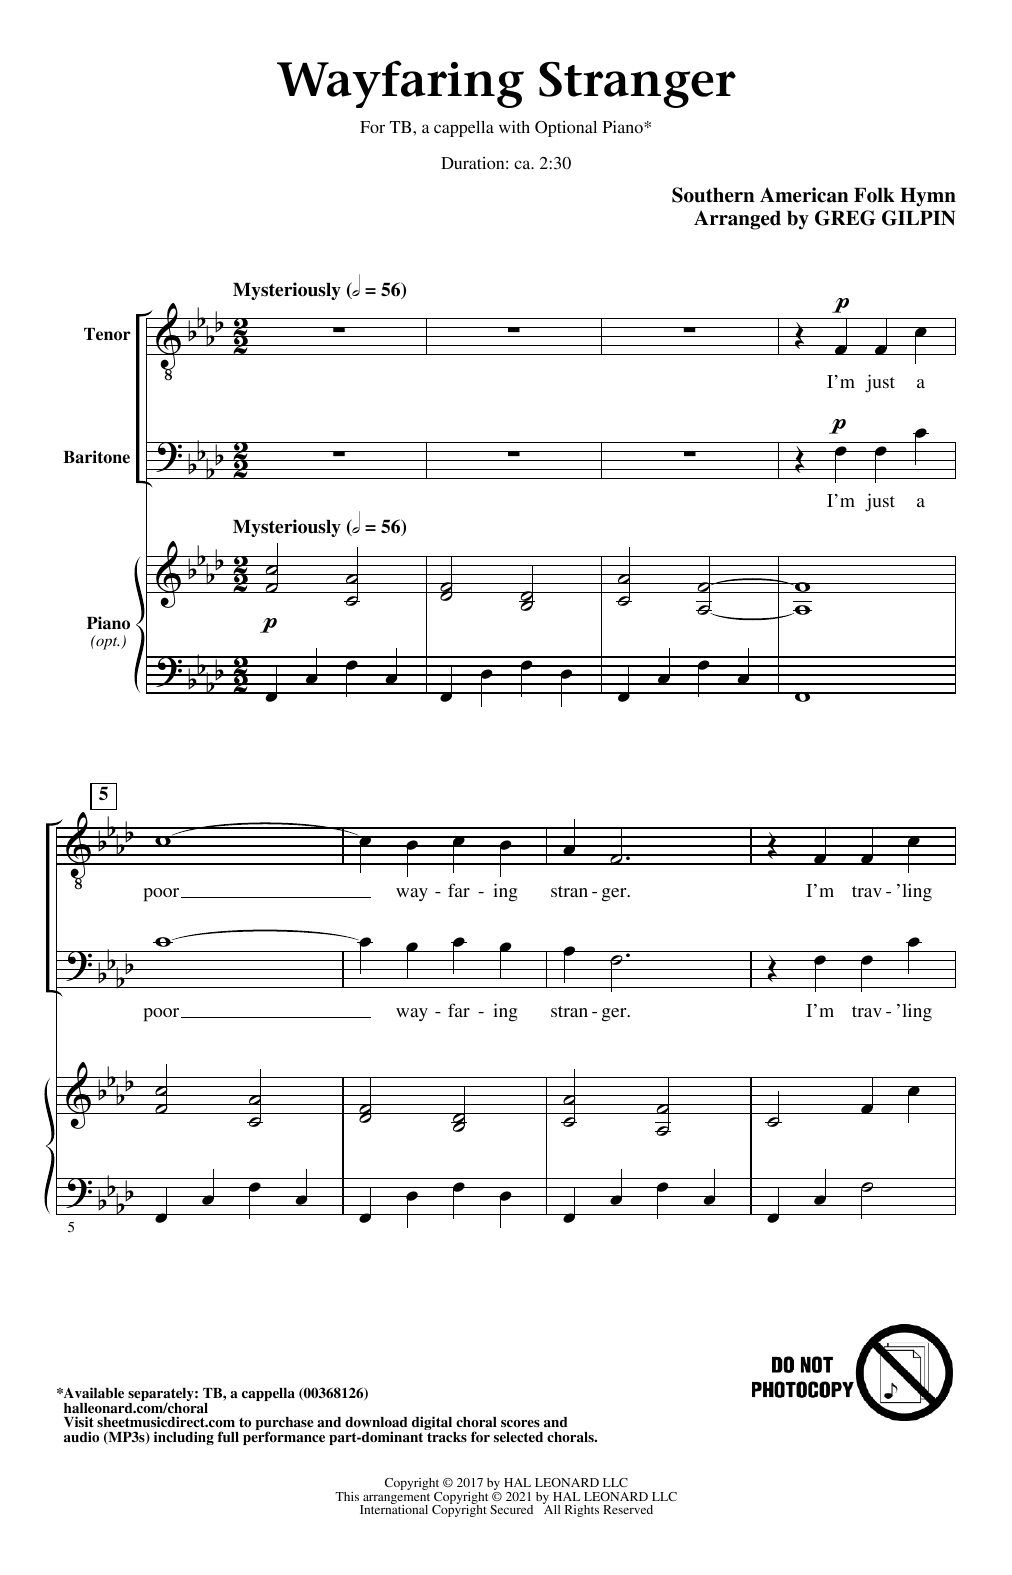 Southern American Folk Hymn Wayfaring Stranger (arr. Greg Gilpin) sheet music notes and chords arranged for TB Choir